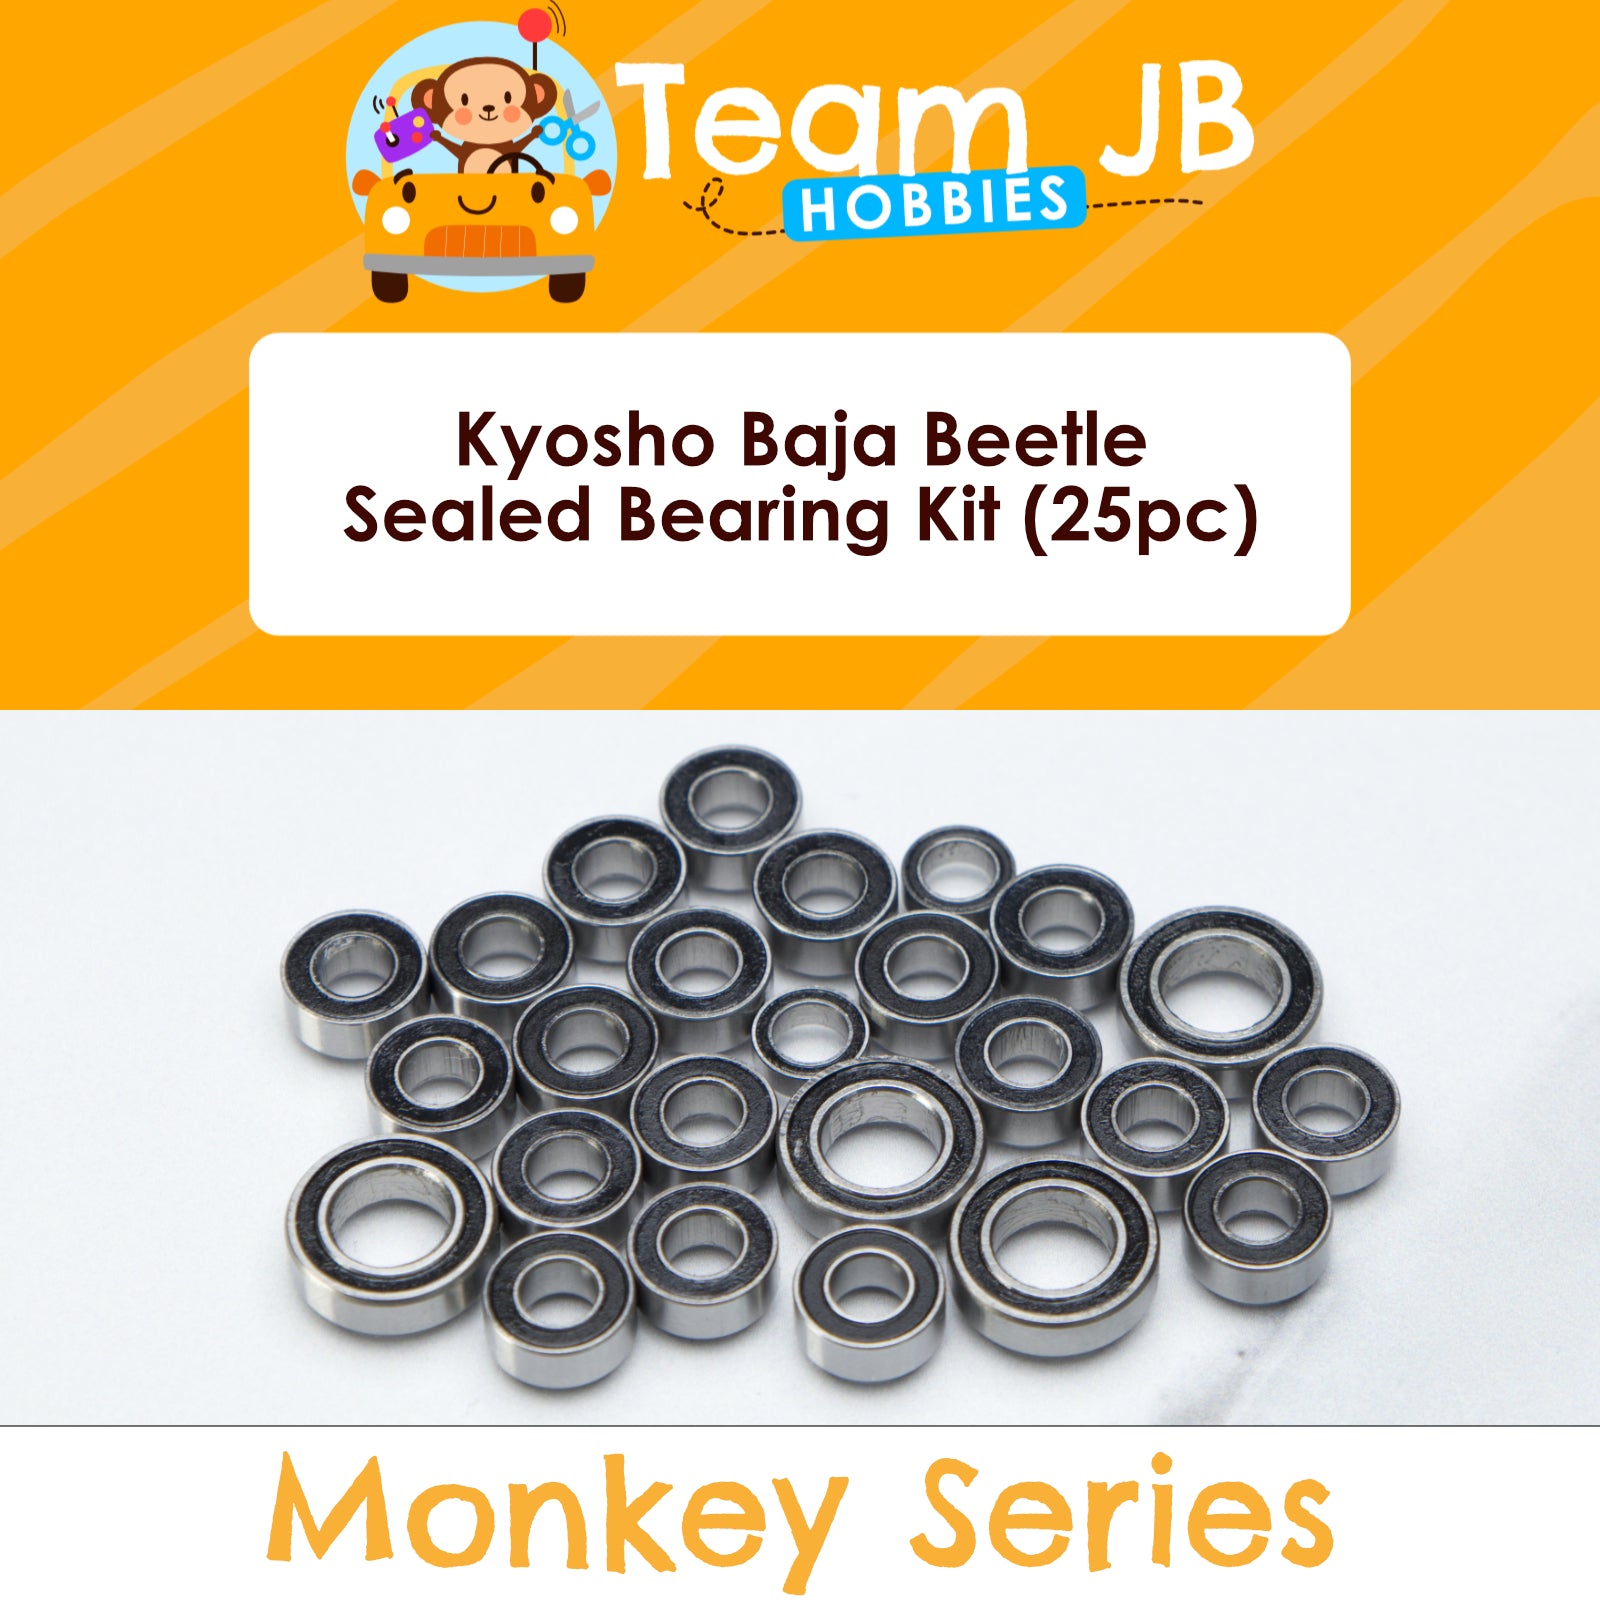 Kyosho Baja Beetle - Sealed Bearing Kit